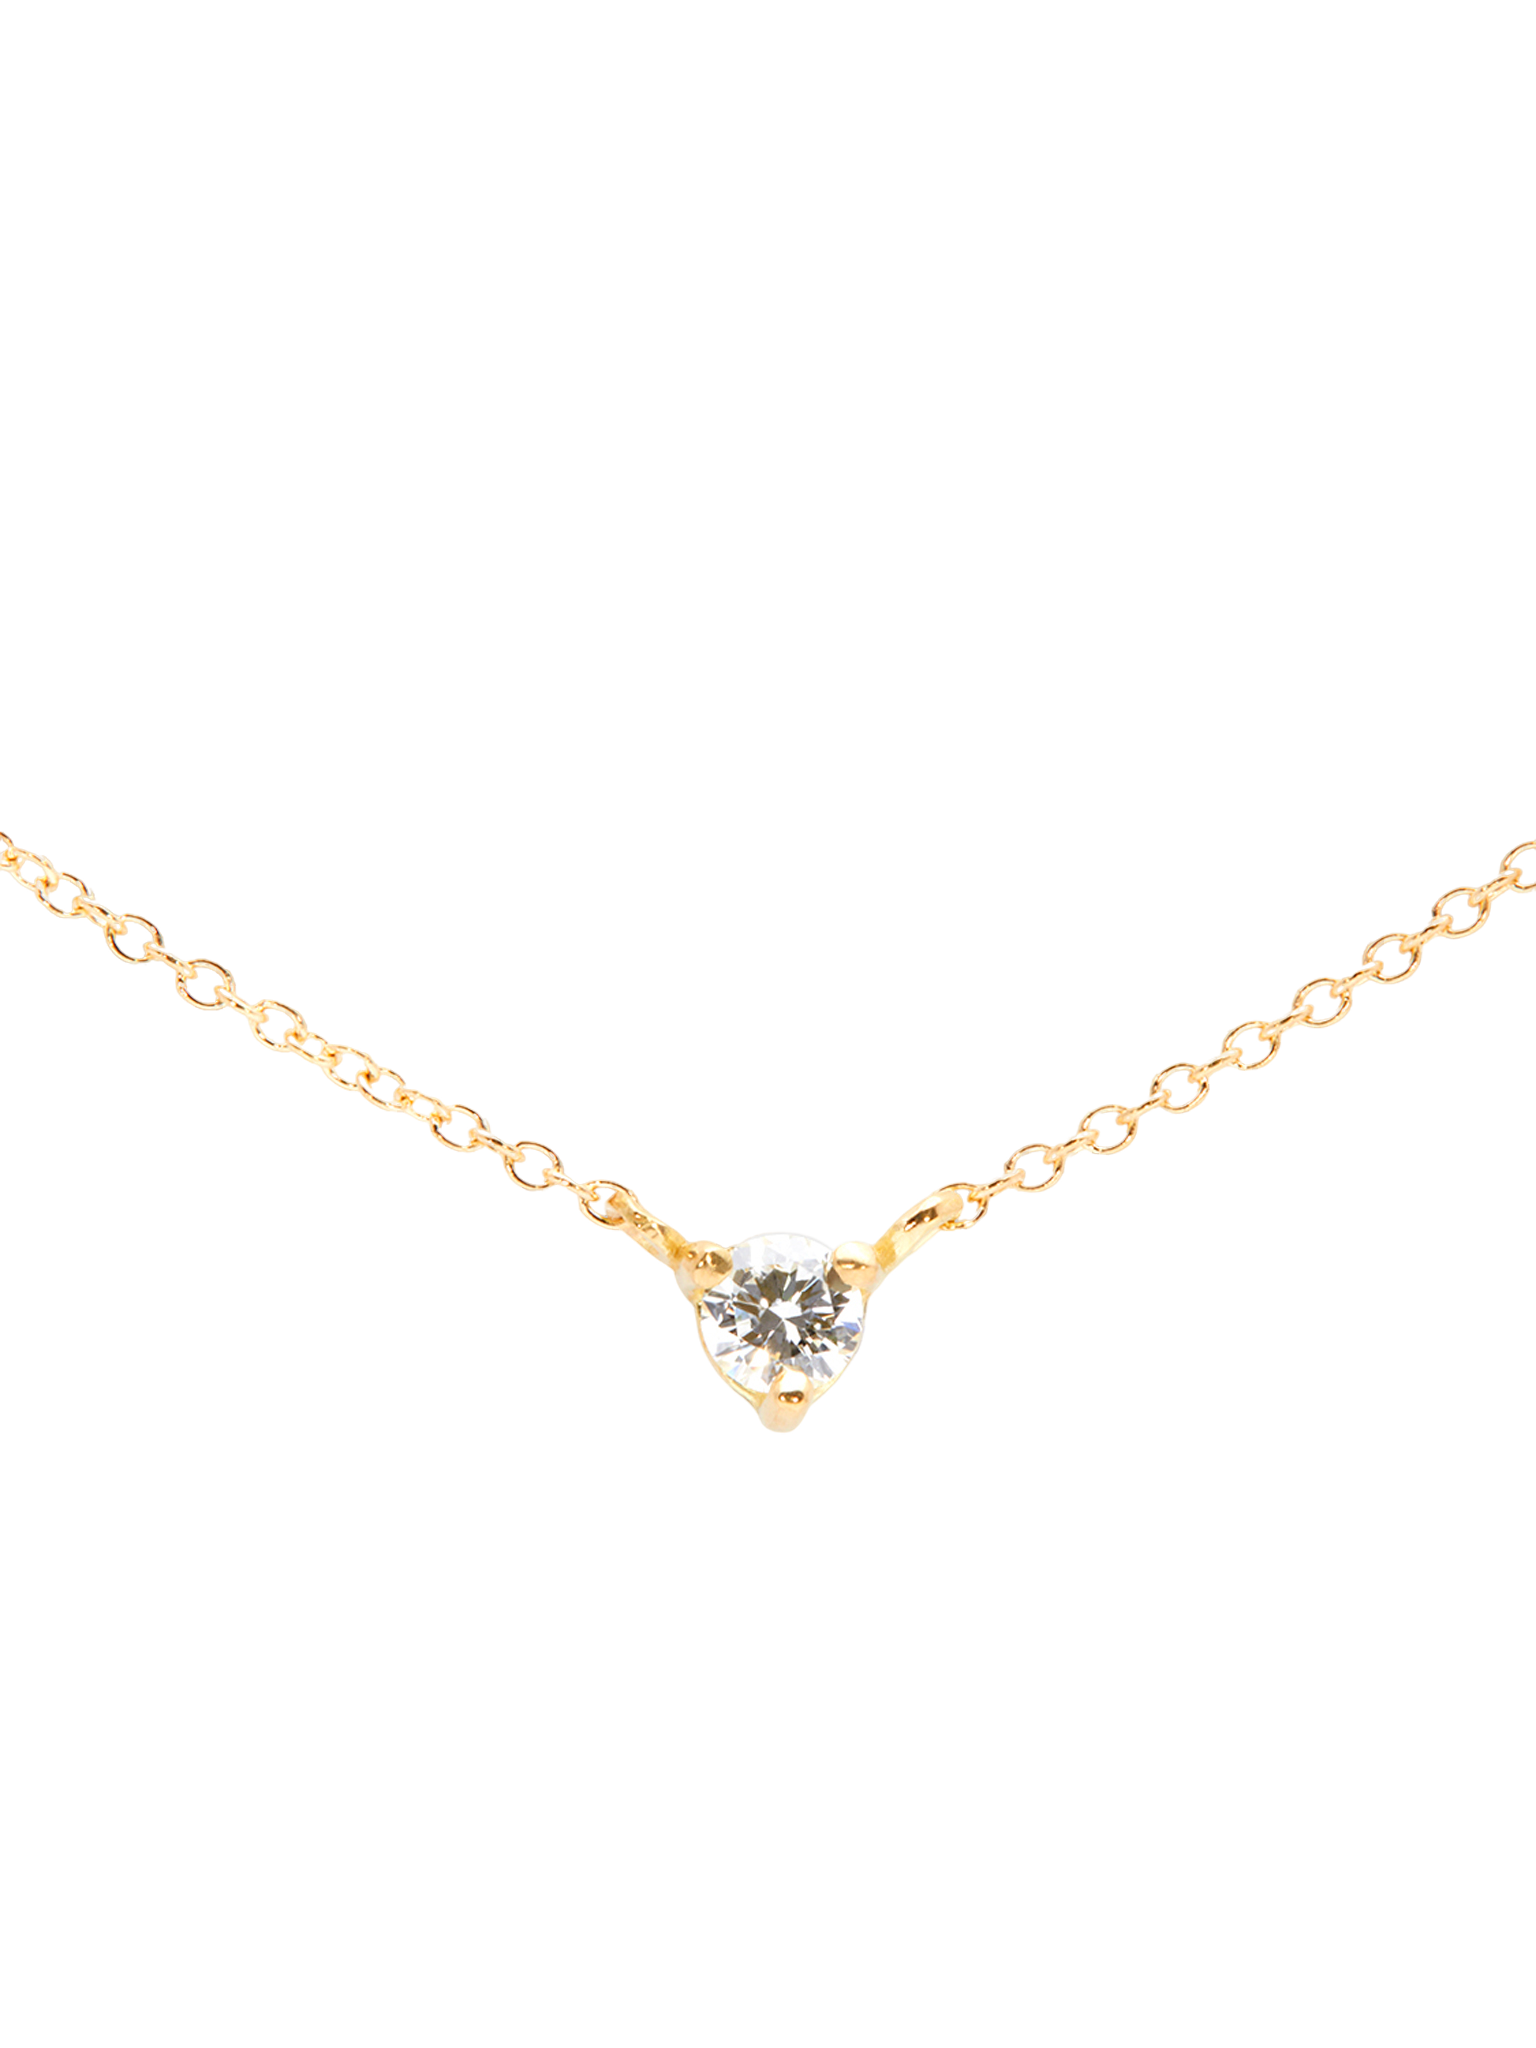 Birthstone white diamond necklace